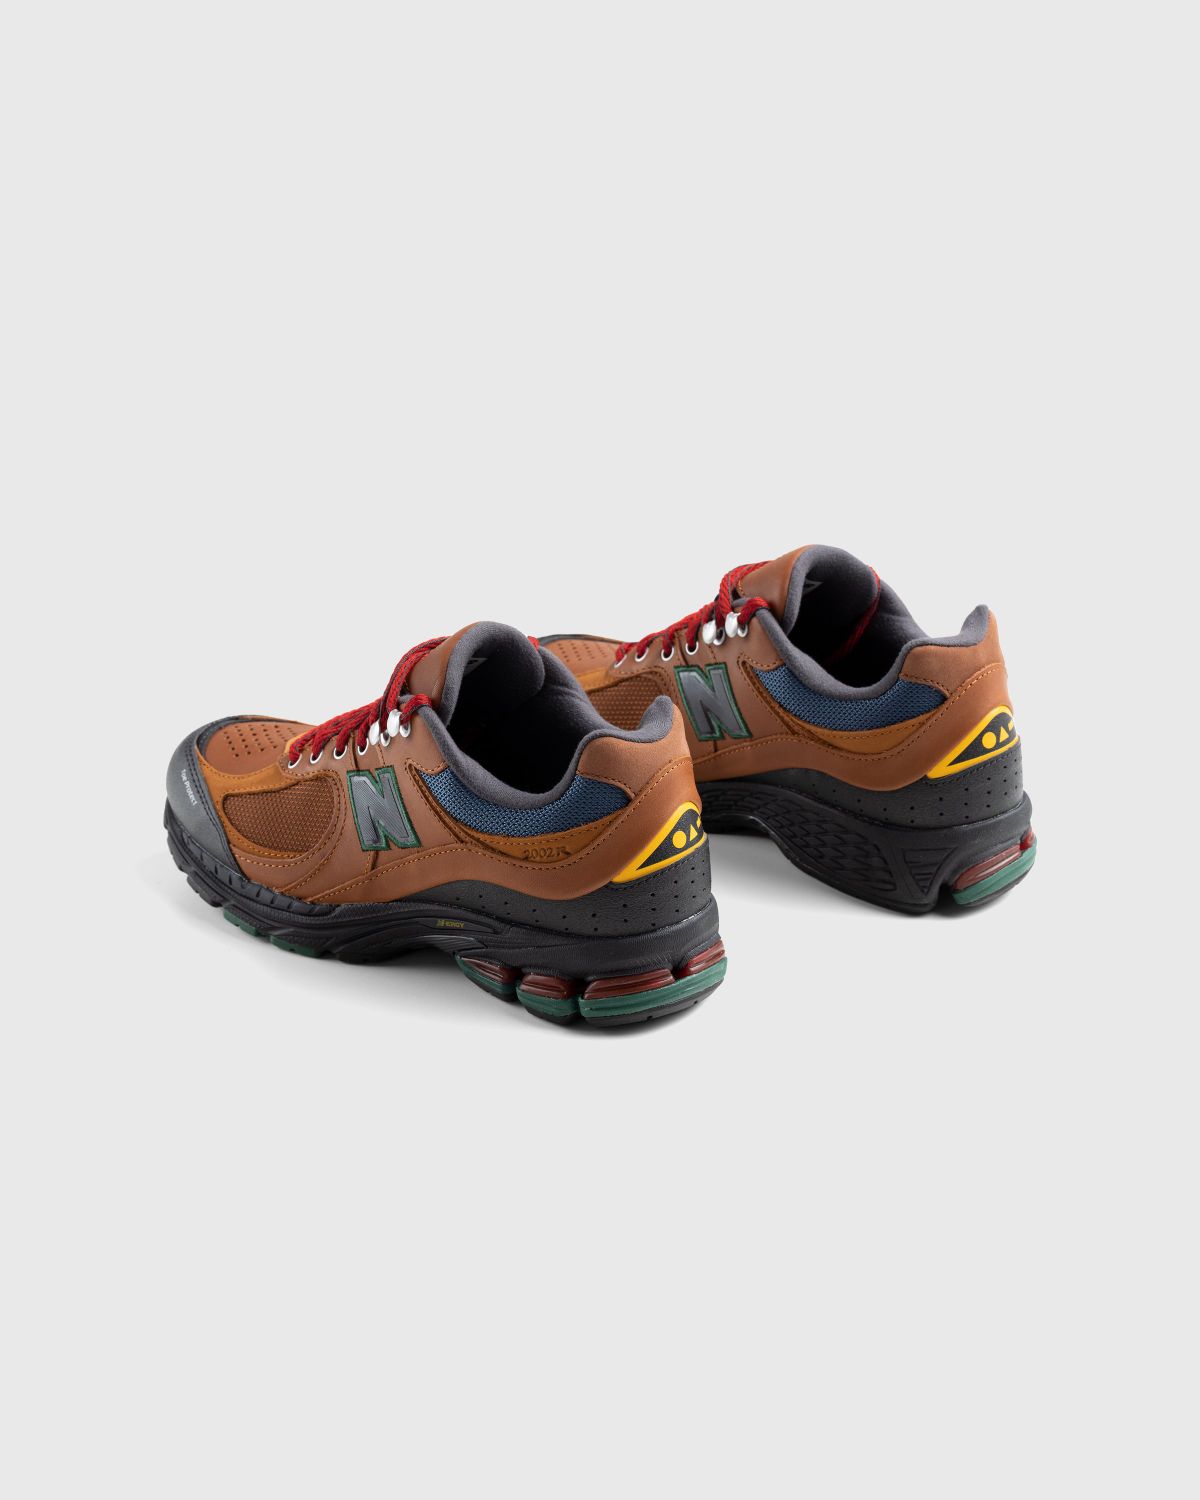 New Balance – M2002RWM Brown/Team Red - Low Top Sneakers - Brown - Image 4